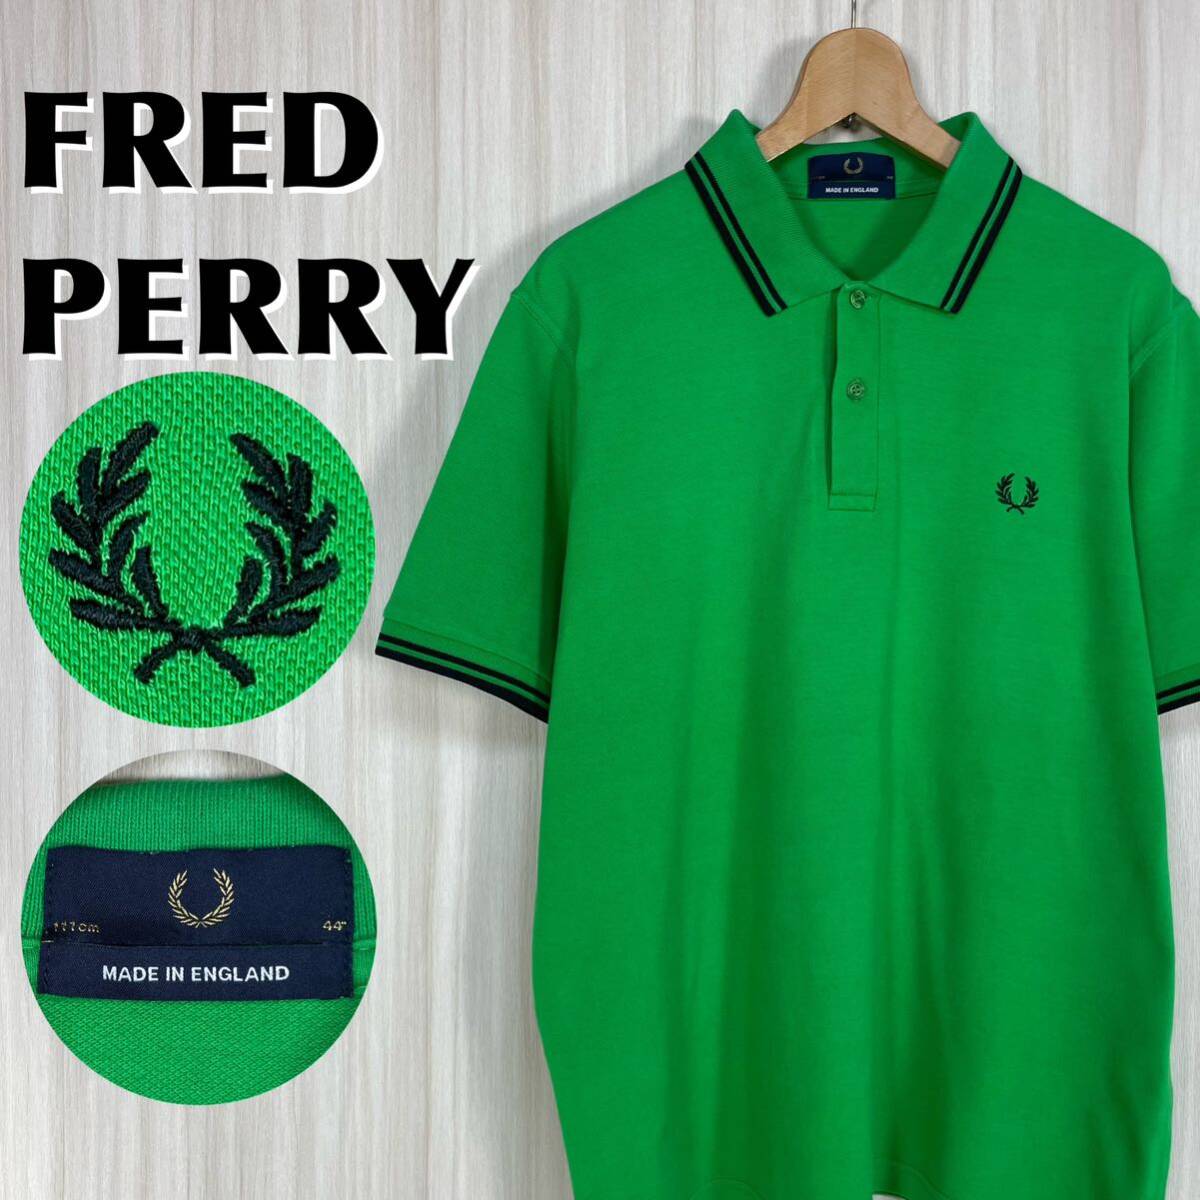 * трудно найти * прекрасный товар * Британия производства * размер 44* FRED PERRY Fred Perry вышивка месяц багряник японский .M12 рубашка-поло с коротким рукавом яркий зеленый Англия производства б/у одежда 